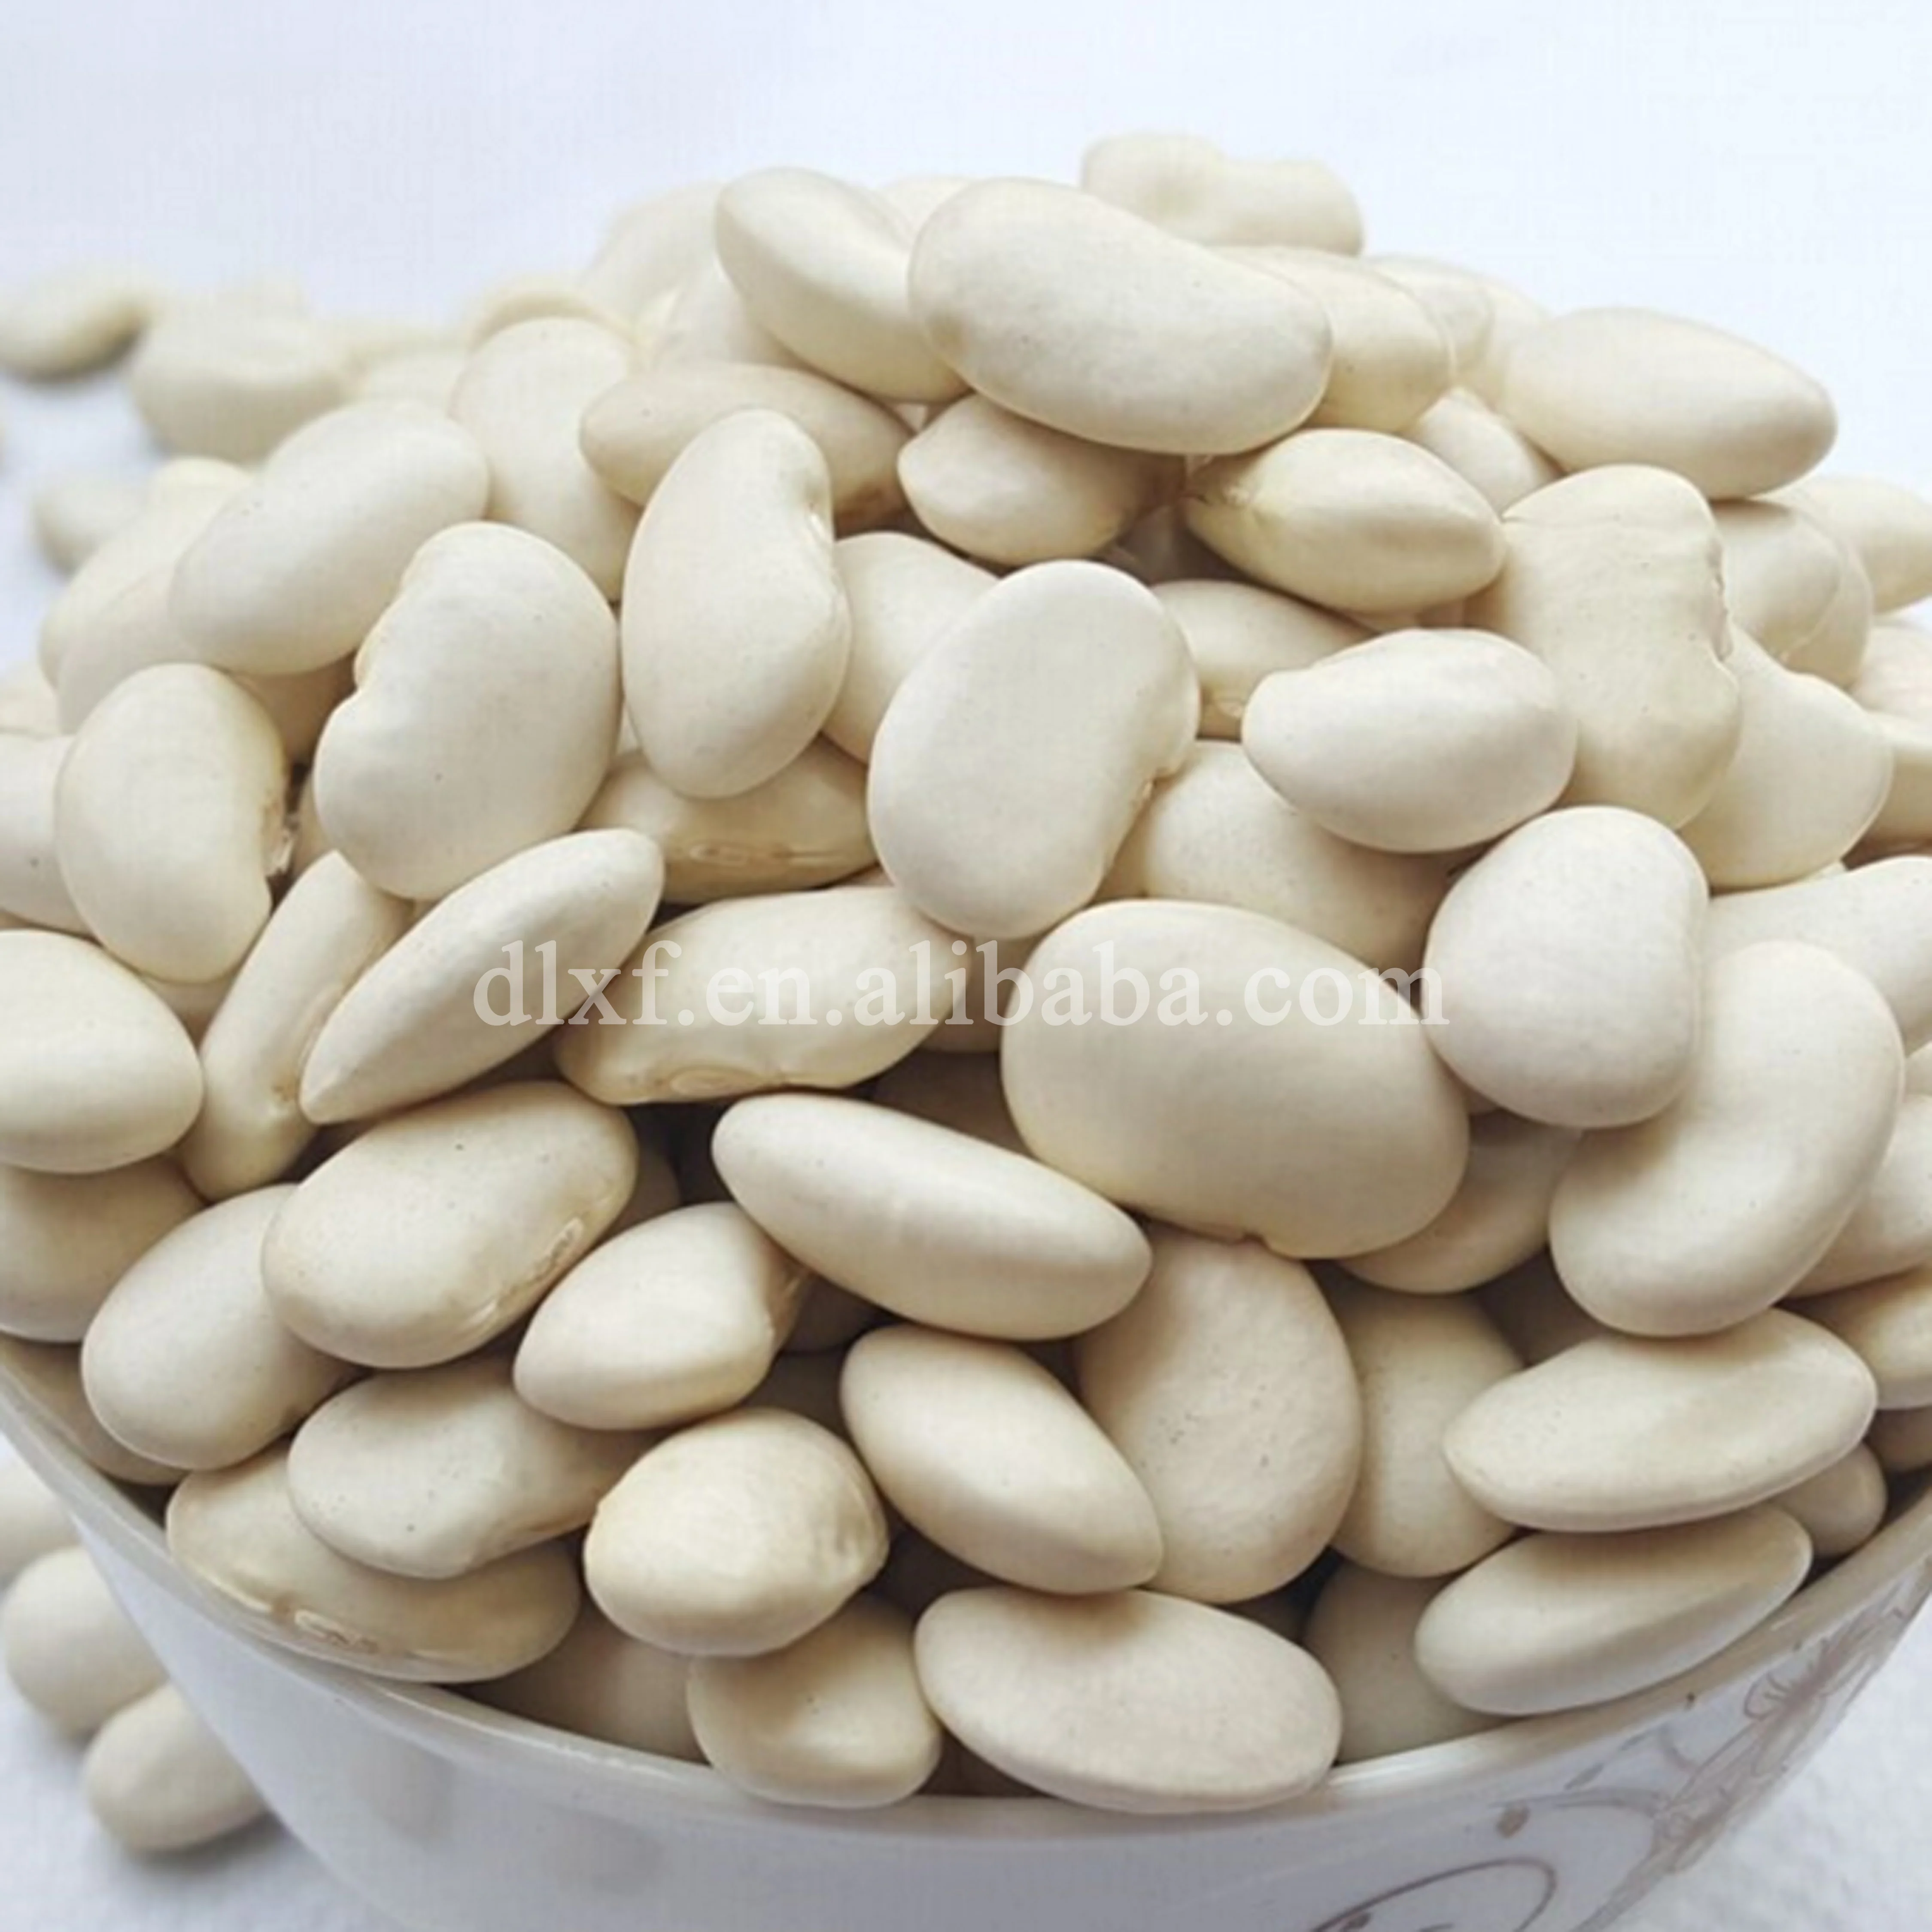 
China white Kidney bean/Japanese non gmo or organic  (379760376)